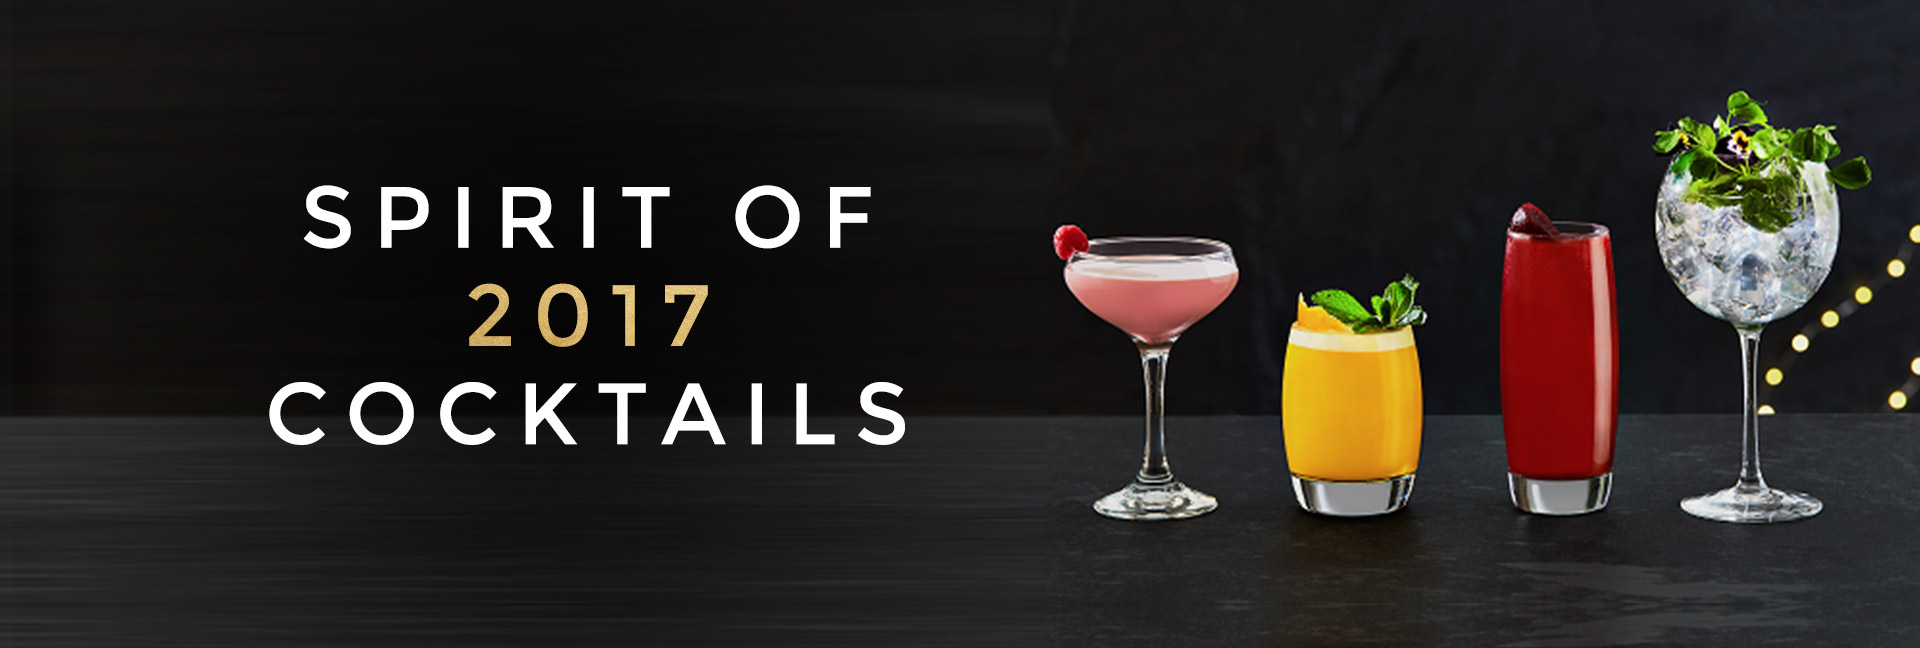 Spirit of 2017 cocktails at All Bar One Aberdeen